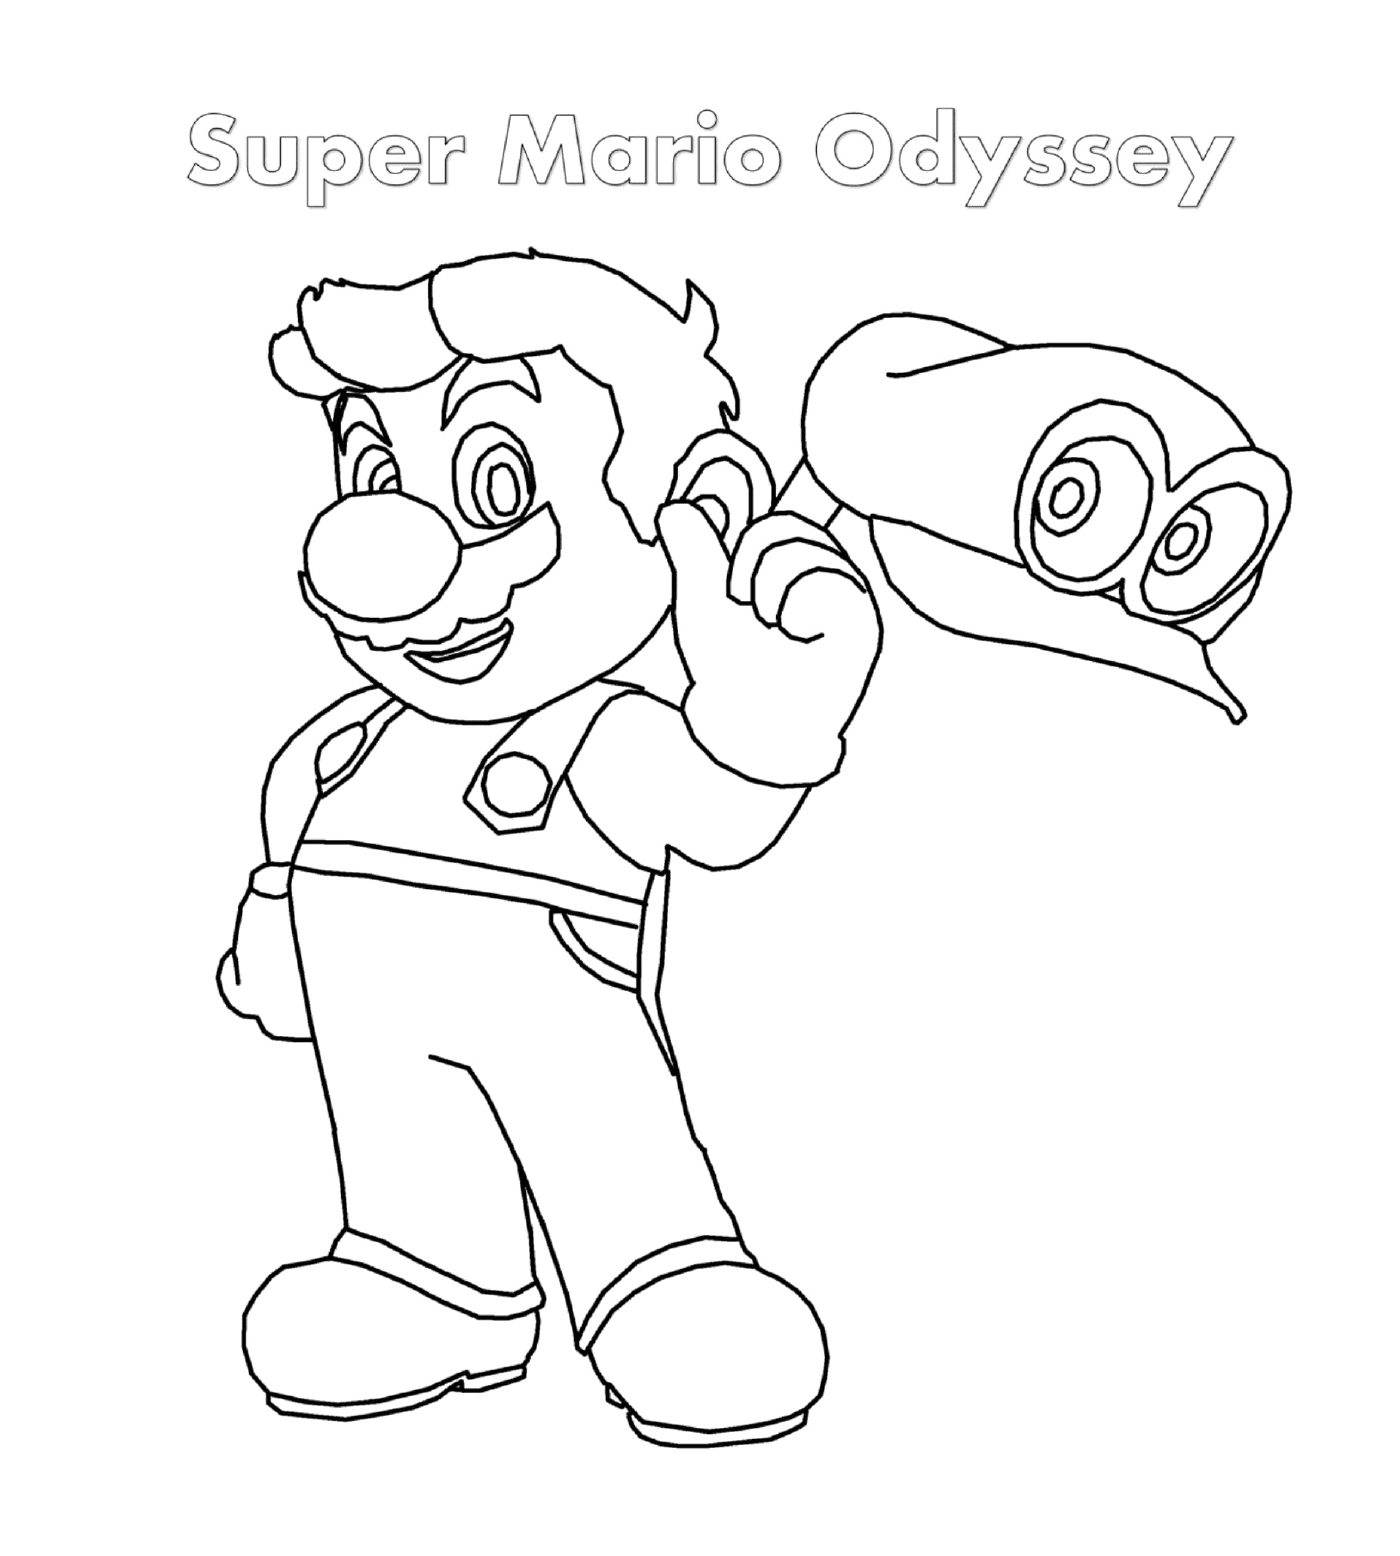  Super Mario Odyssey, an epic adventure 